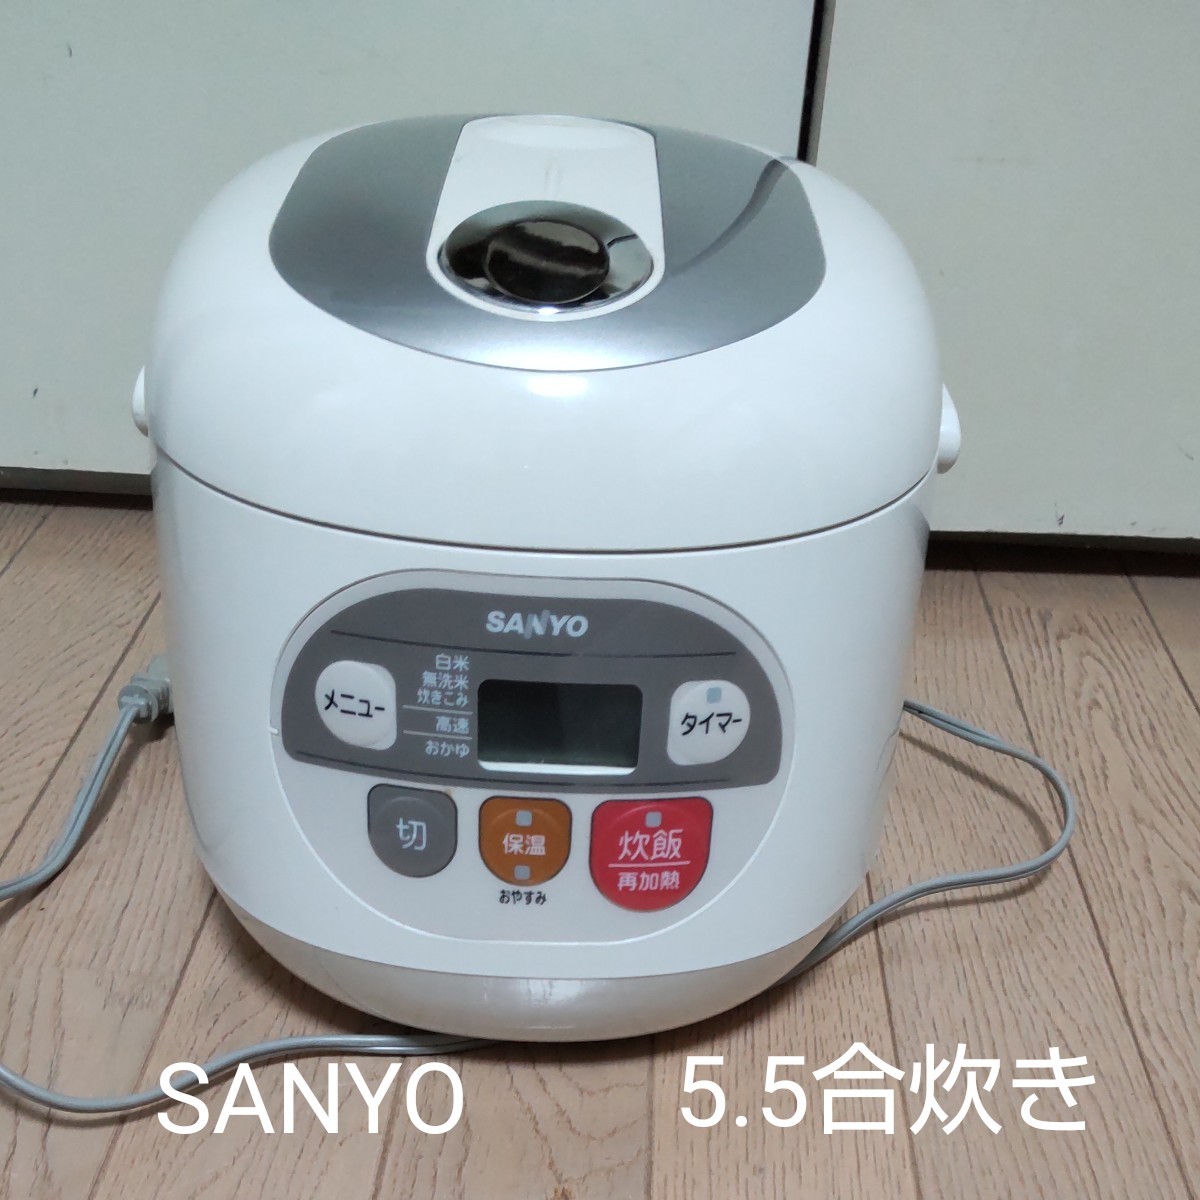 SANYO マイコン炊飯ジャー 5.5合炊き